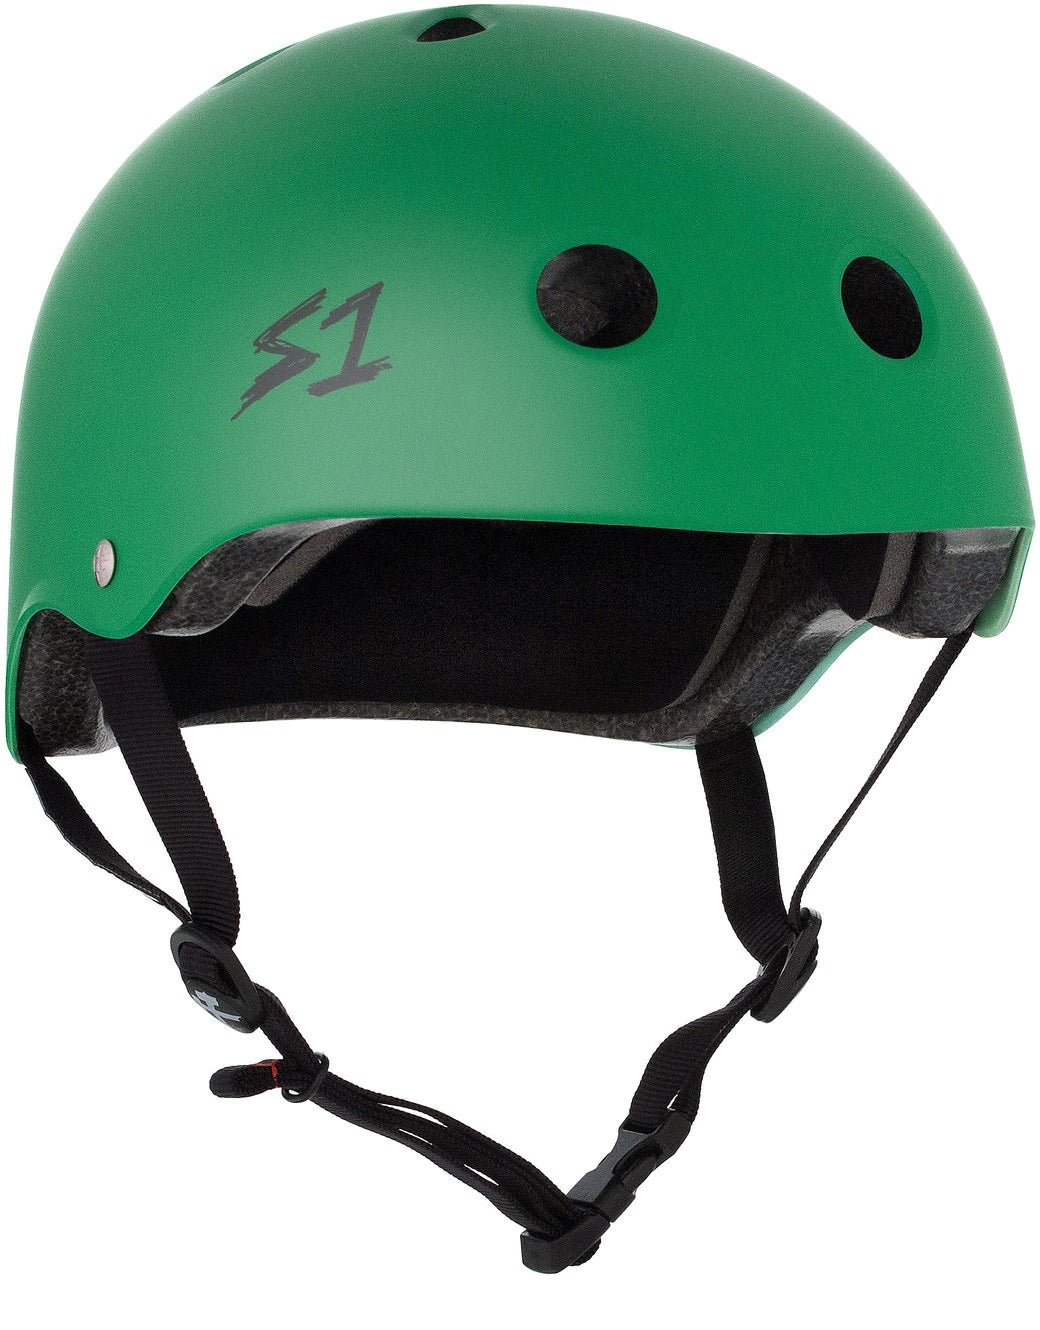 S1 Lifer Helmet in Kelly Green